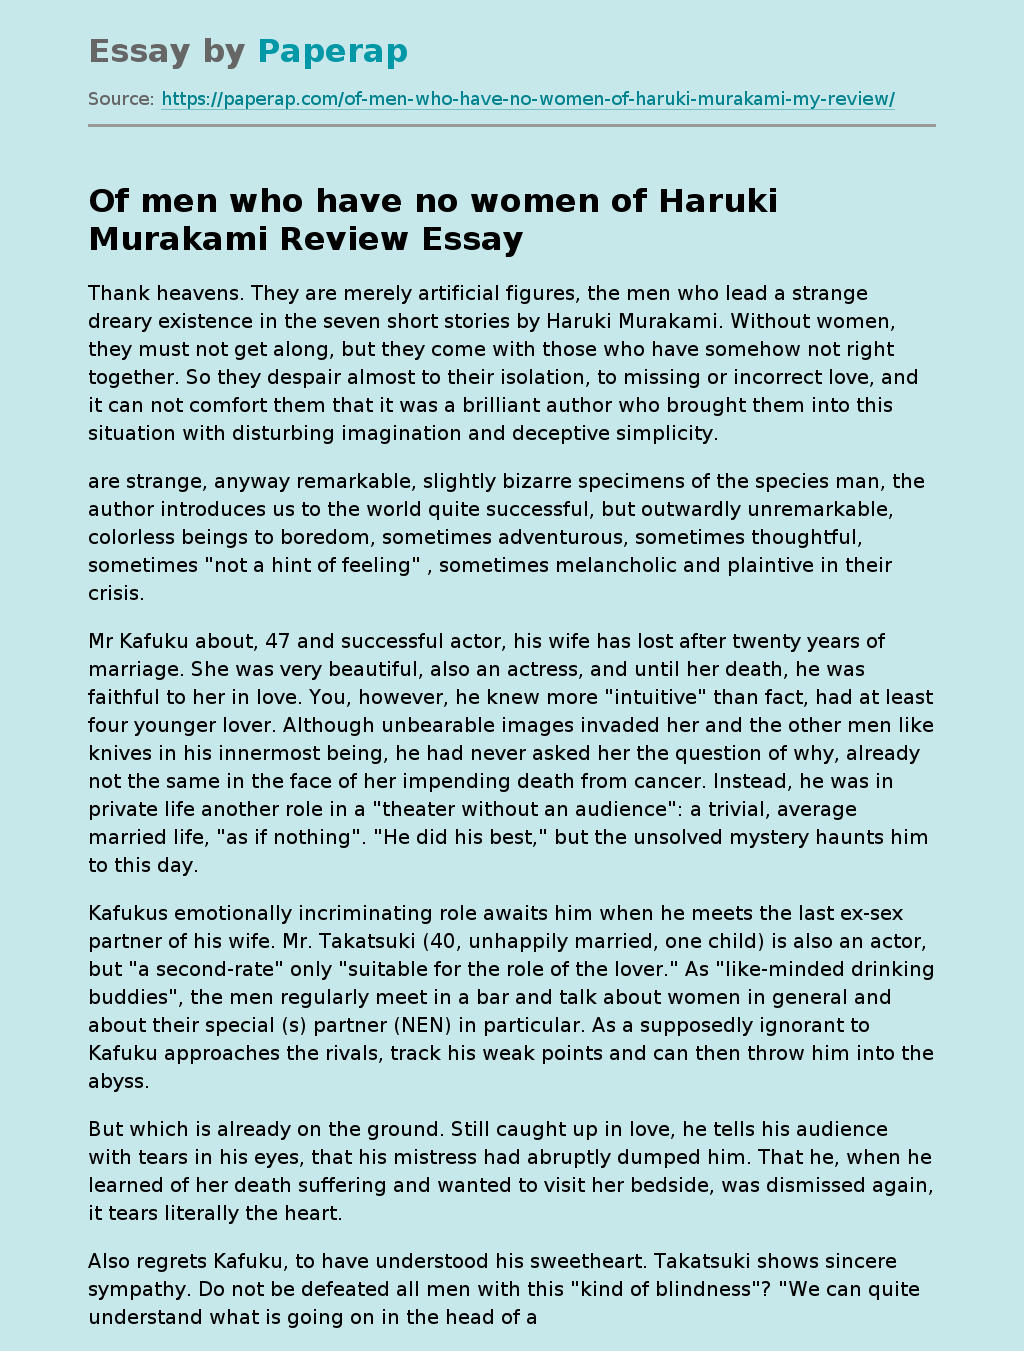 Of Men Who Have No Women Of Haruki Murakami Review